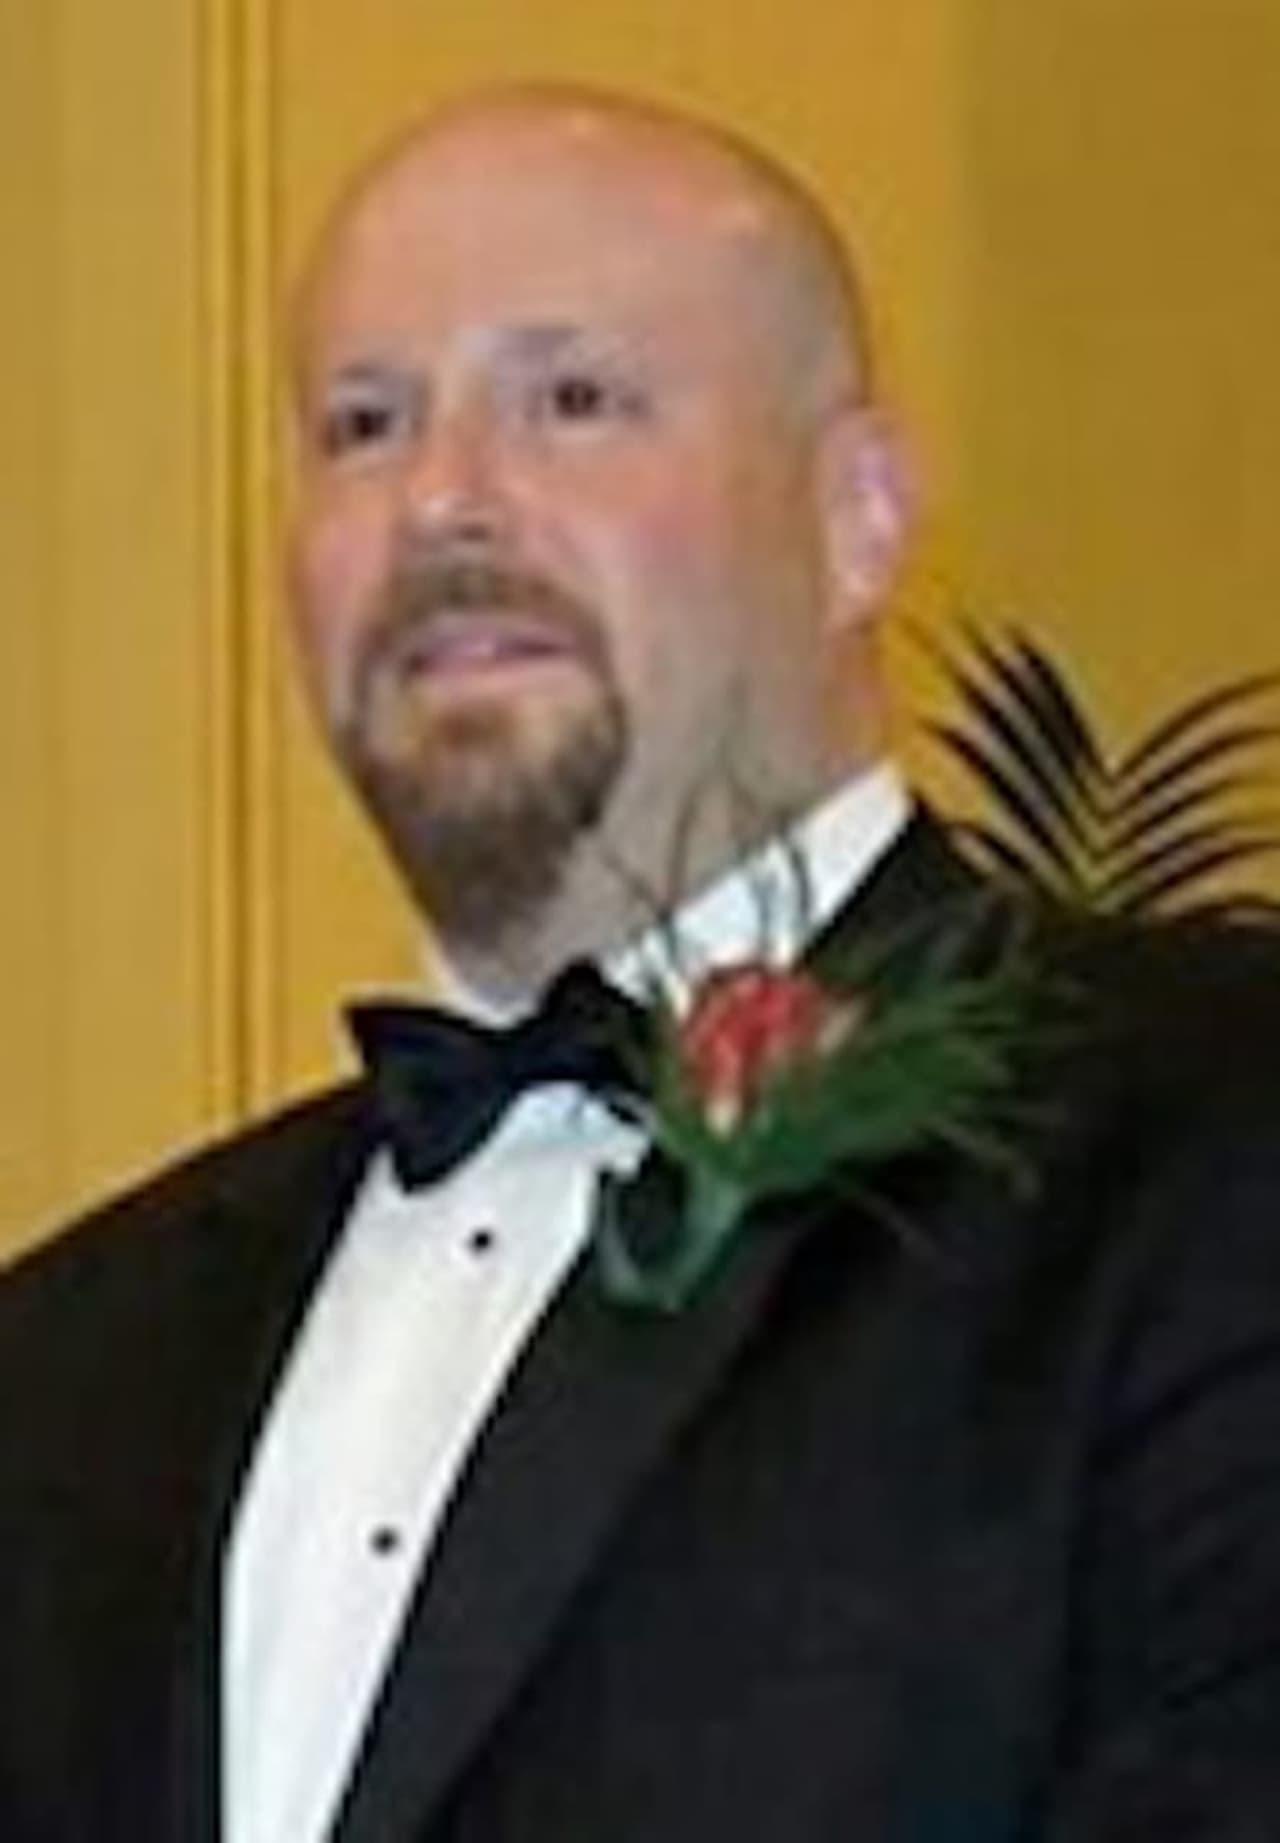 Kenneth F. Gross, 53